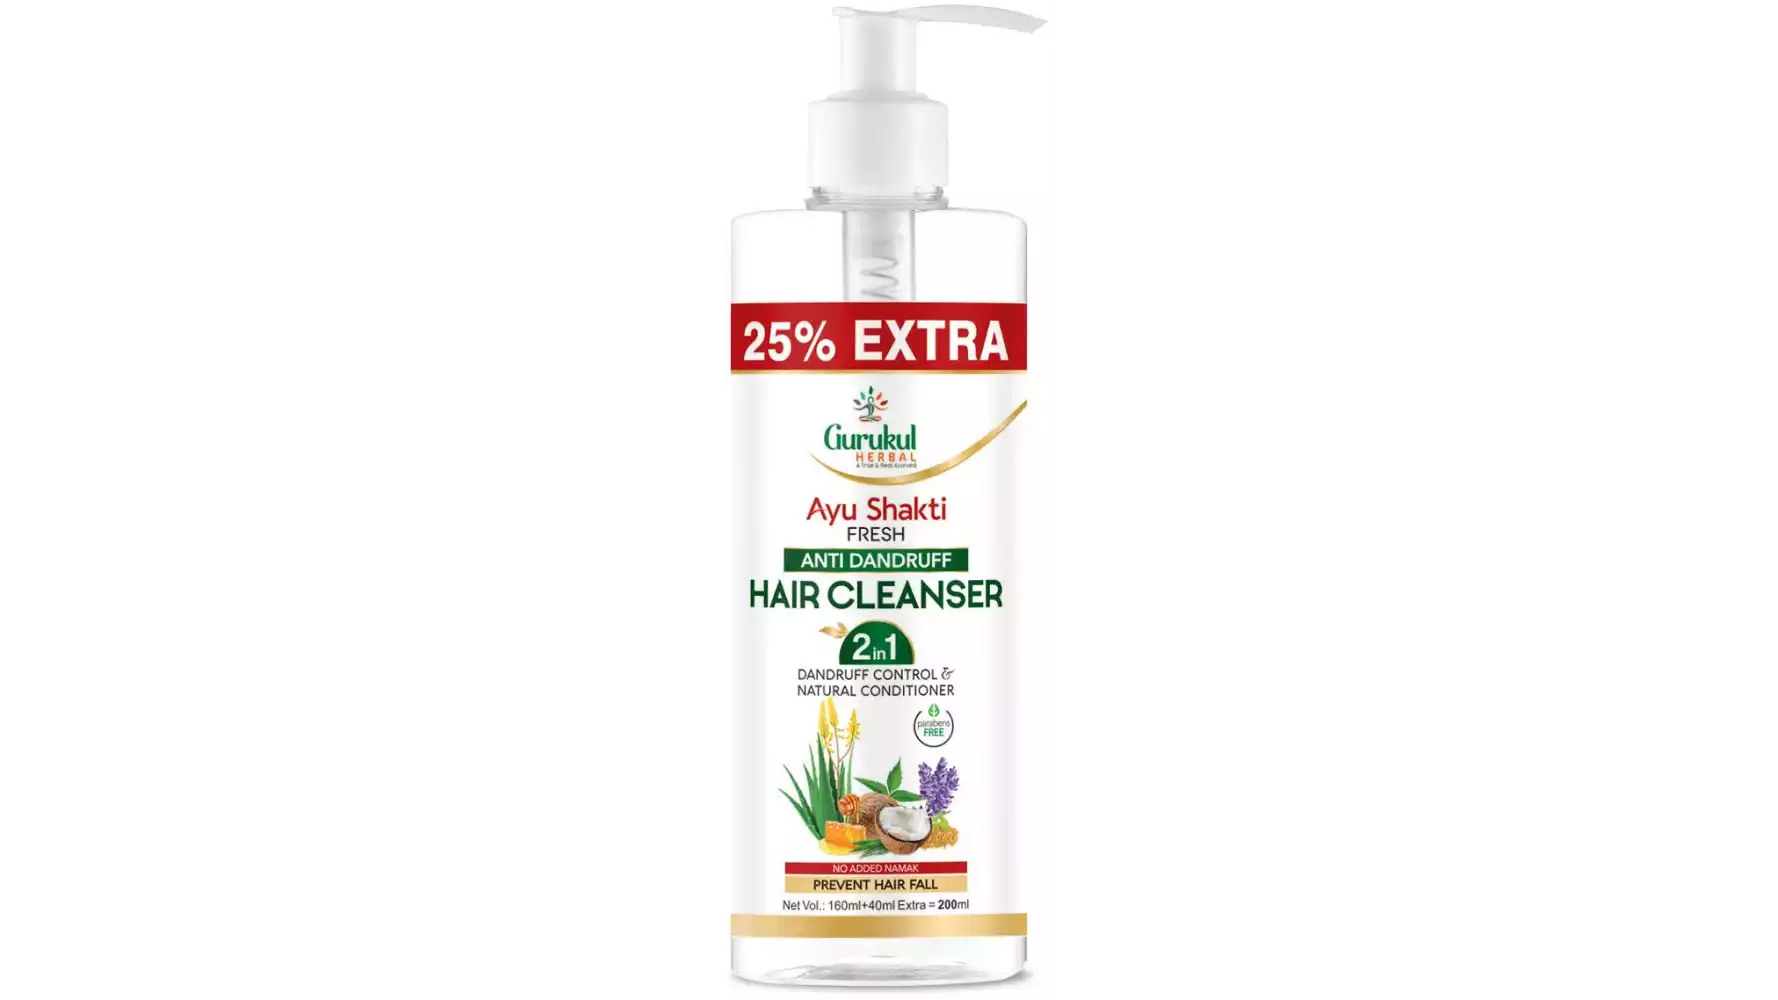 Gurukul Herbal Ayu Shakti Fresh Anti Dandruff Hair Cleanser (200ml)